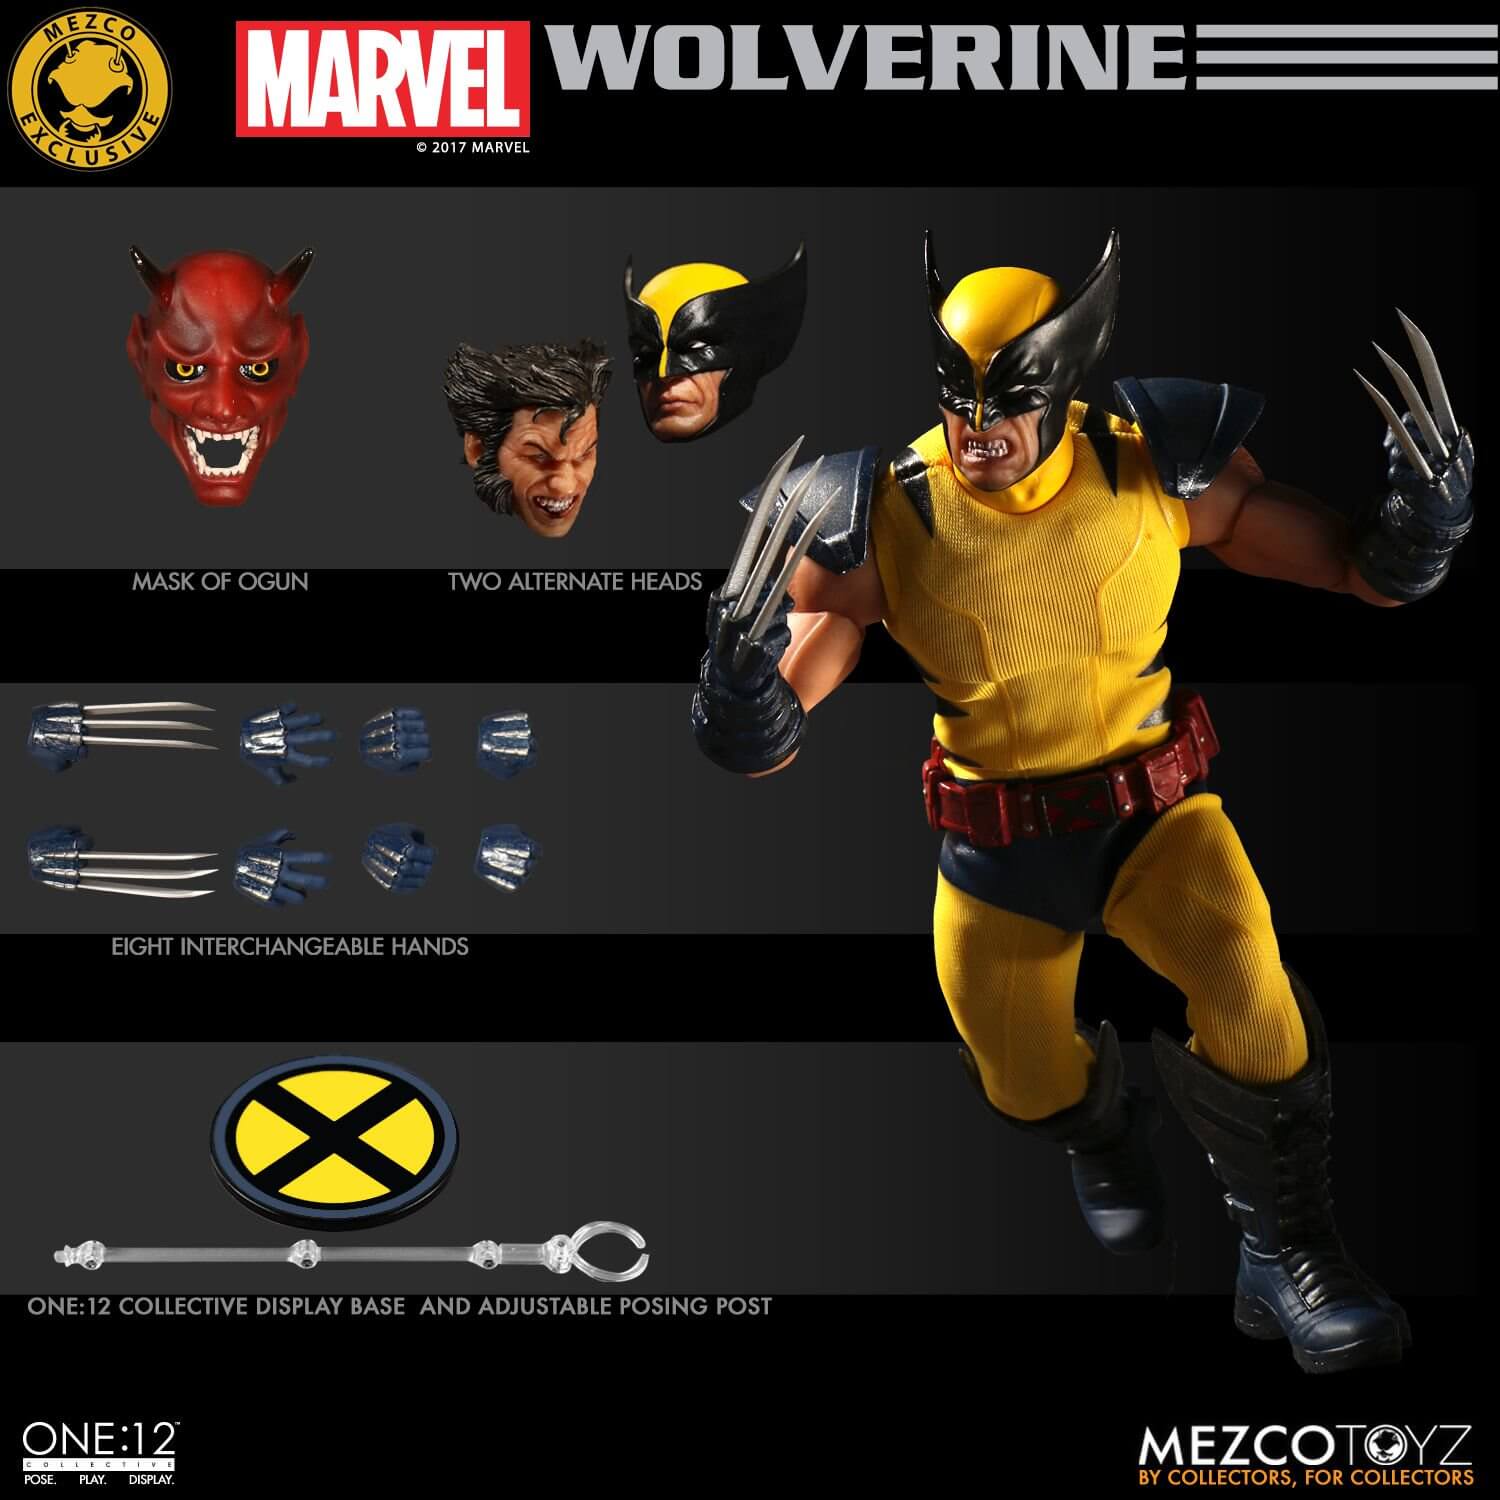 Mezco Toyz One:12 Collective Classic Wolverine -4ColorHeroes